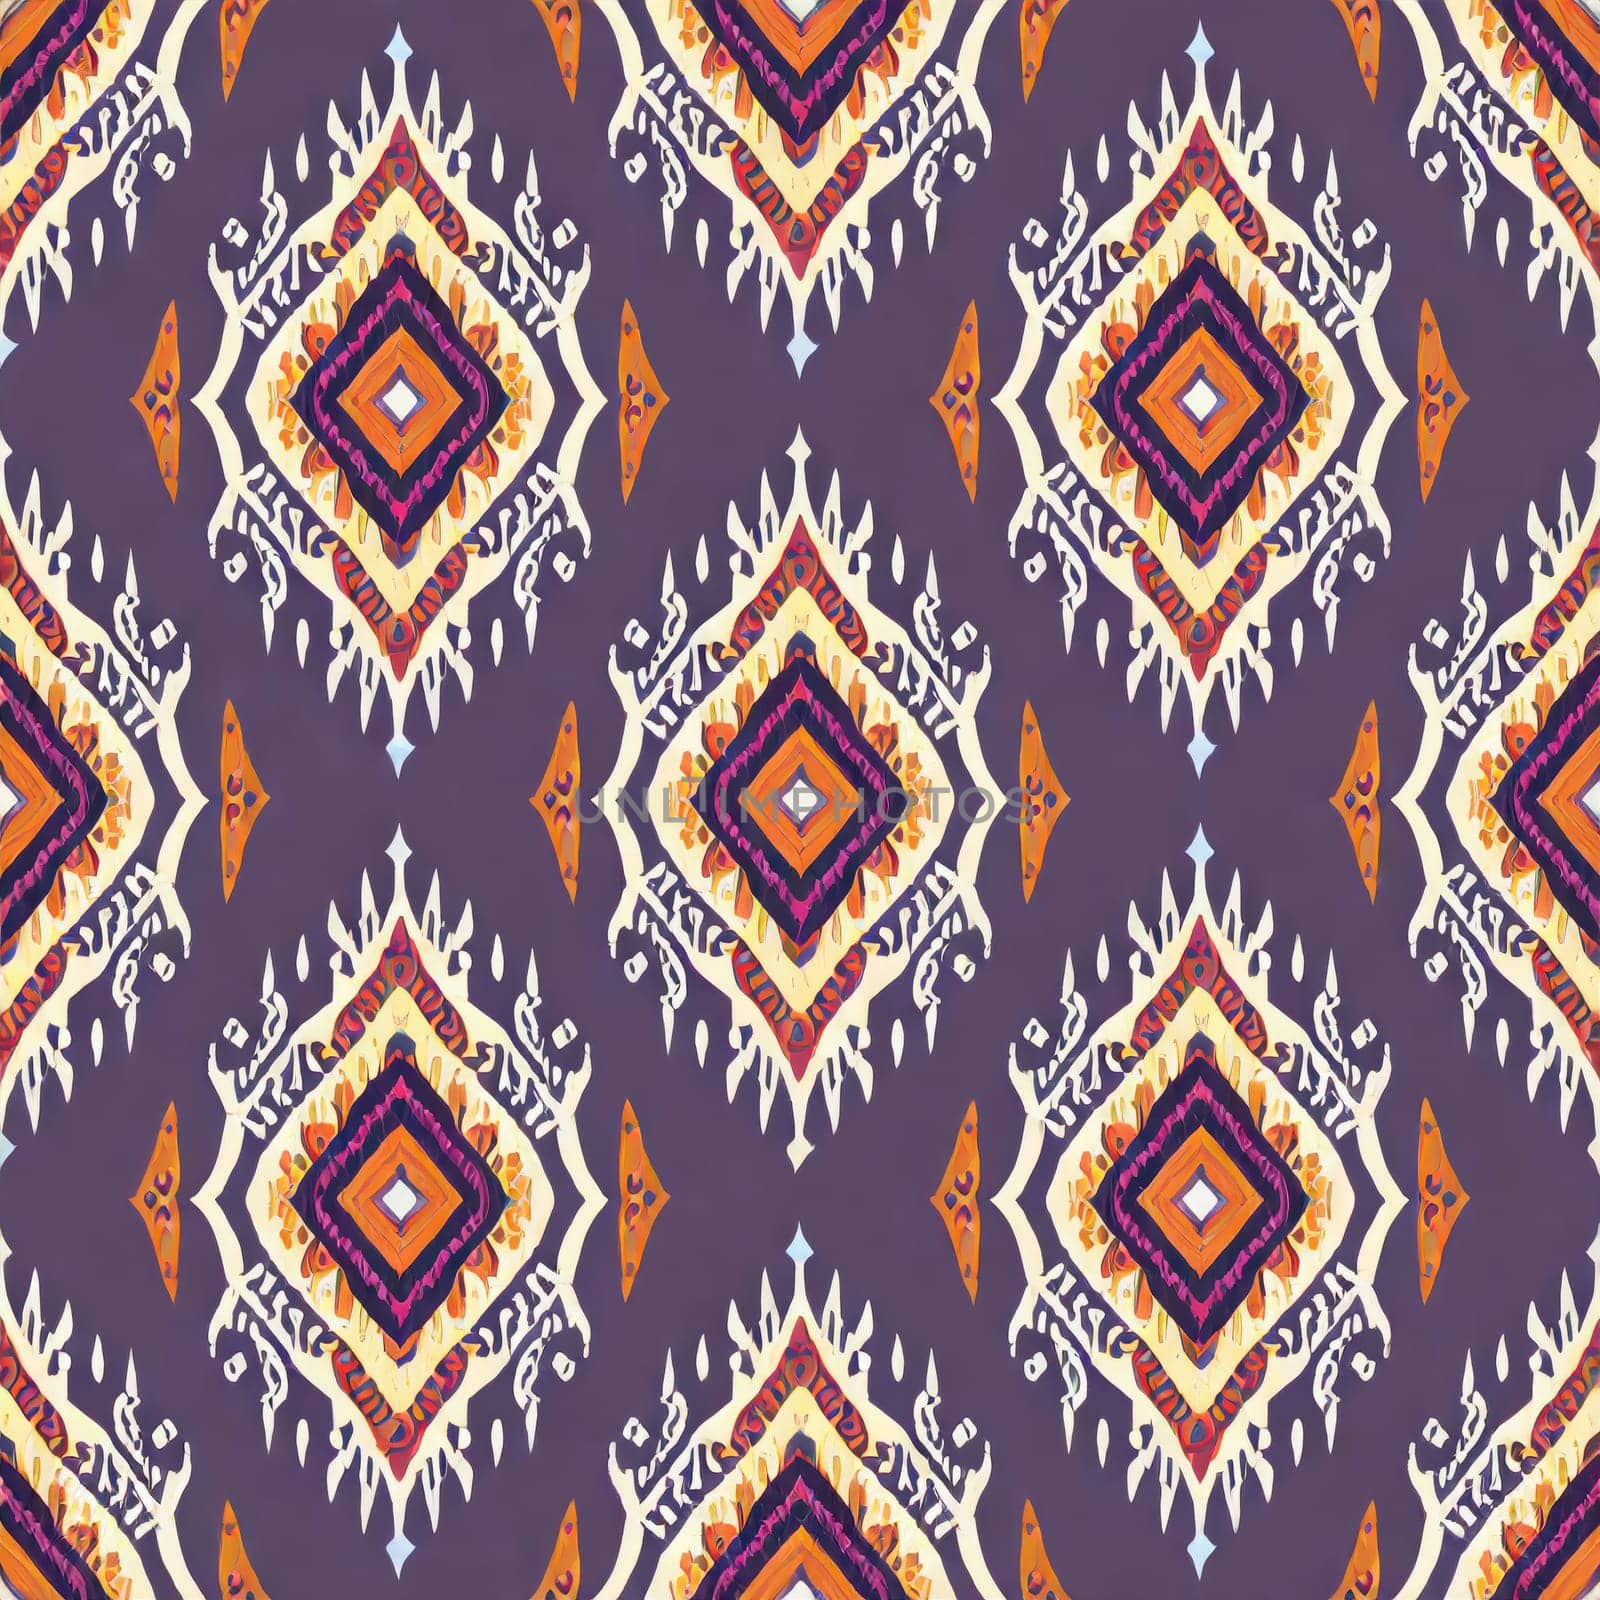 Digital seamless pattern etnic style block print by PeaceYAY